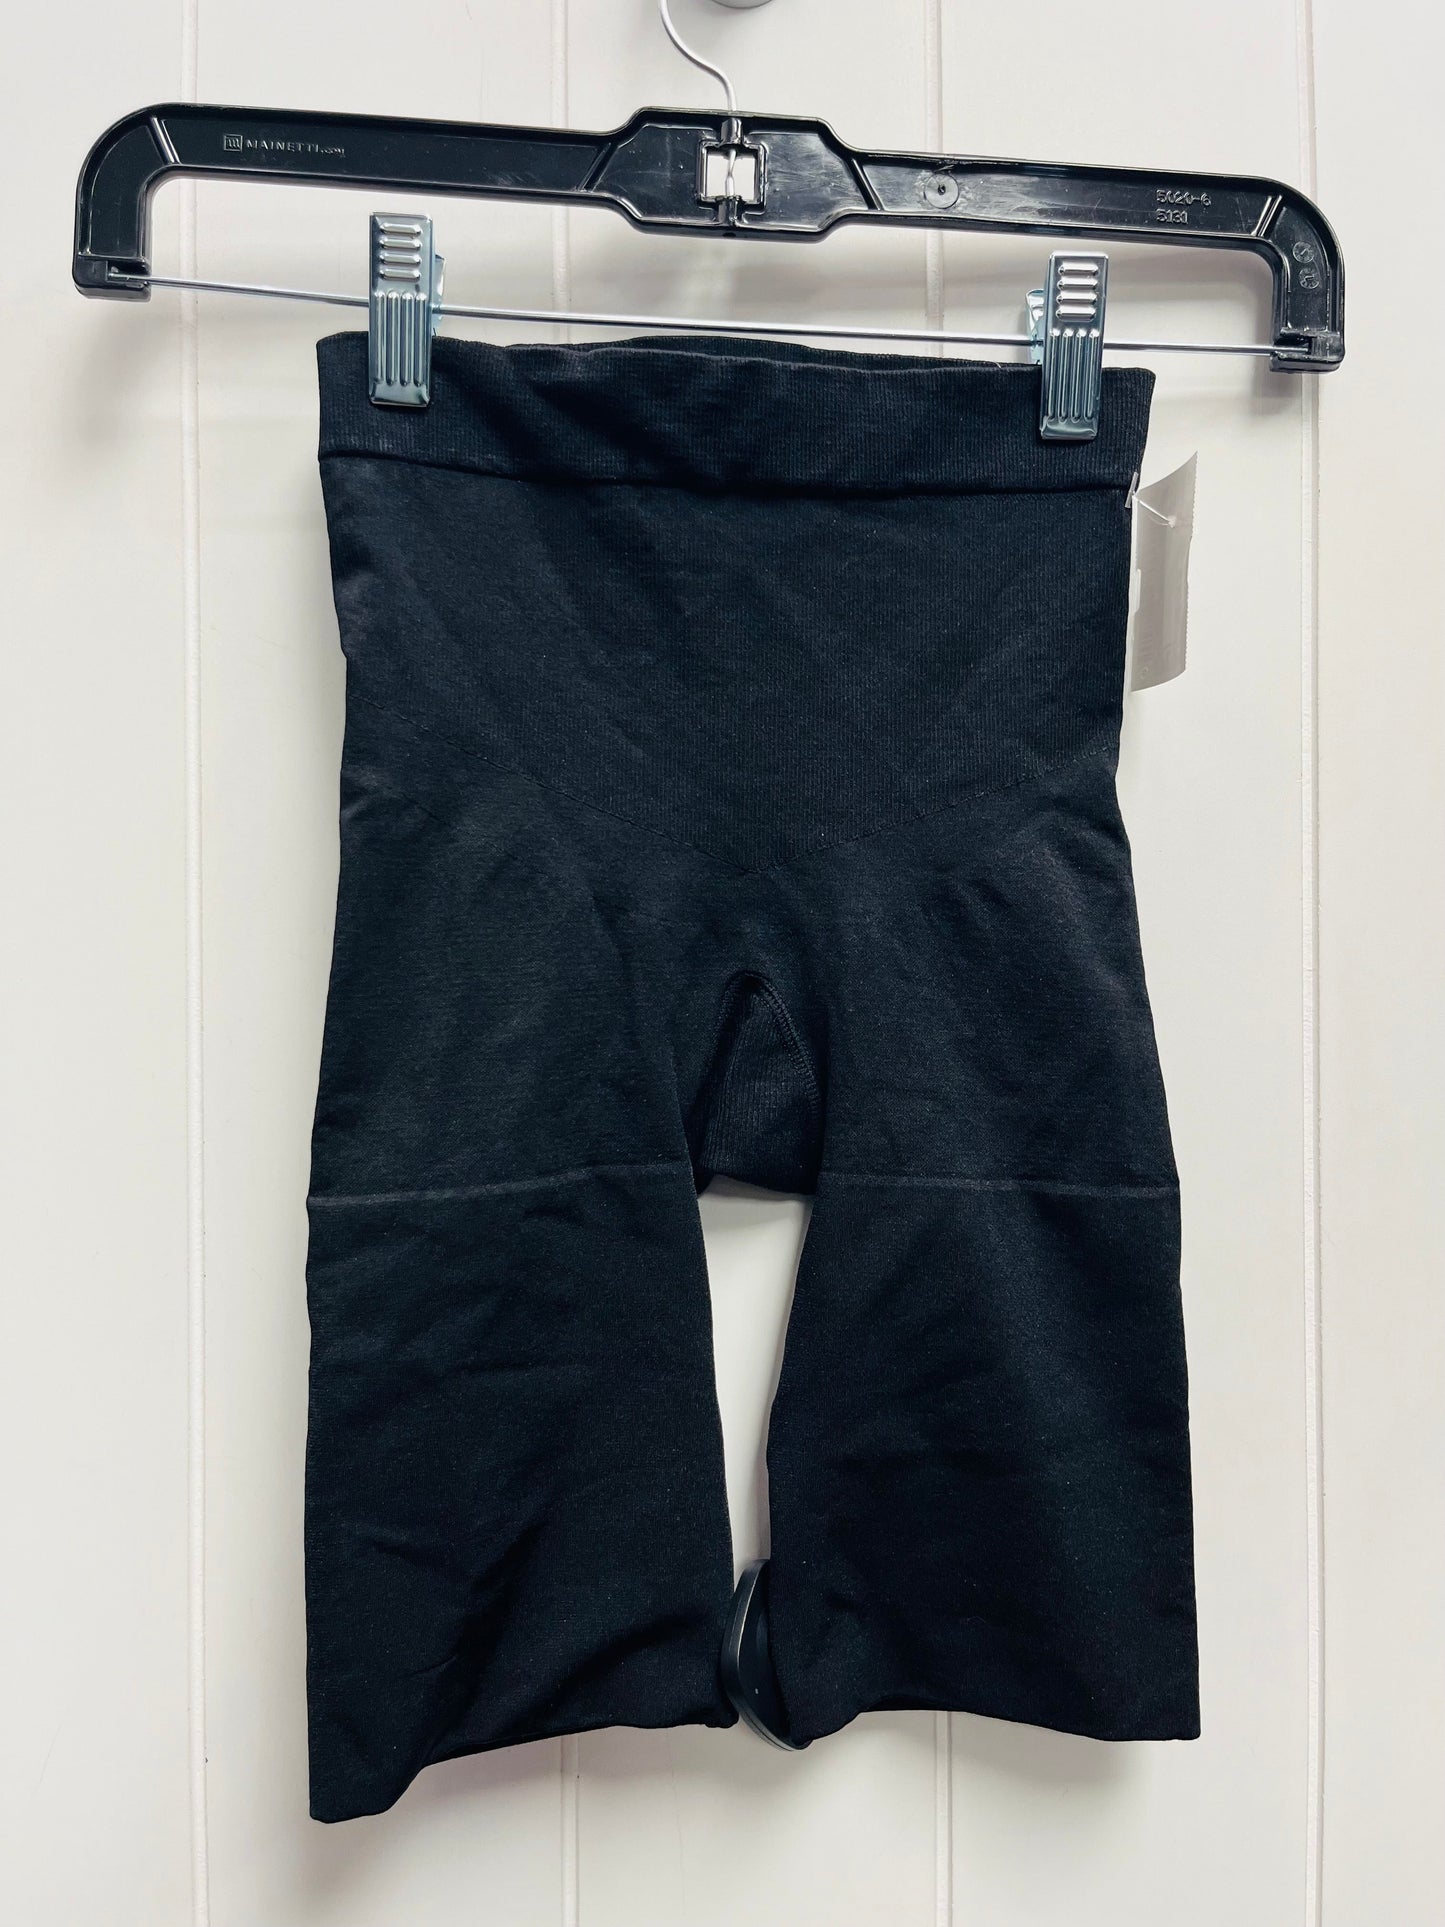 Black Shorts Spanx, Size S